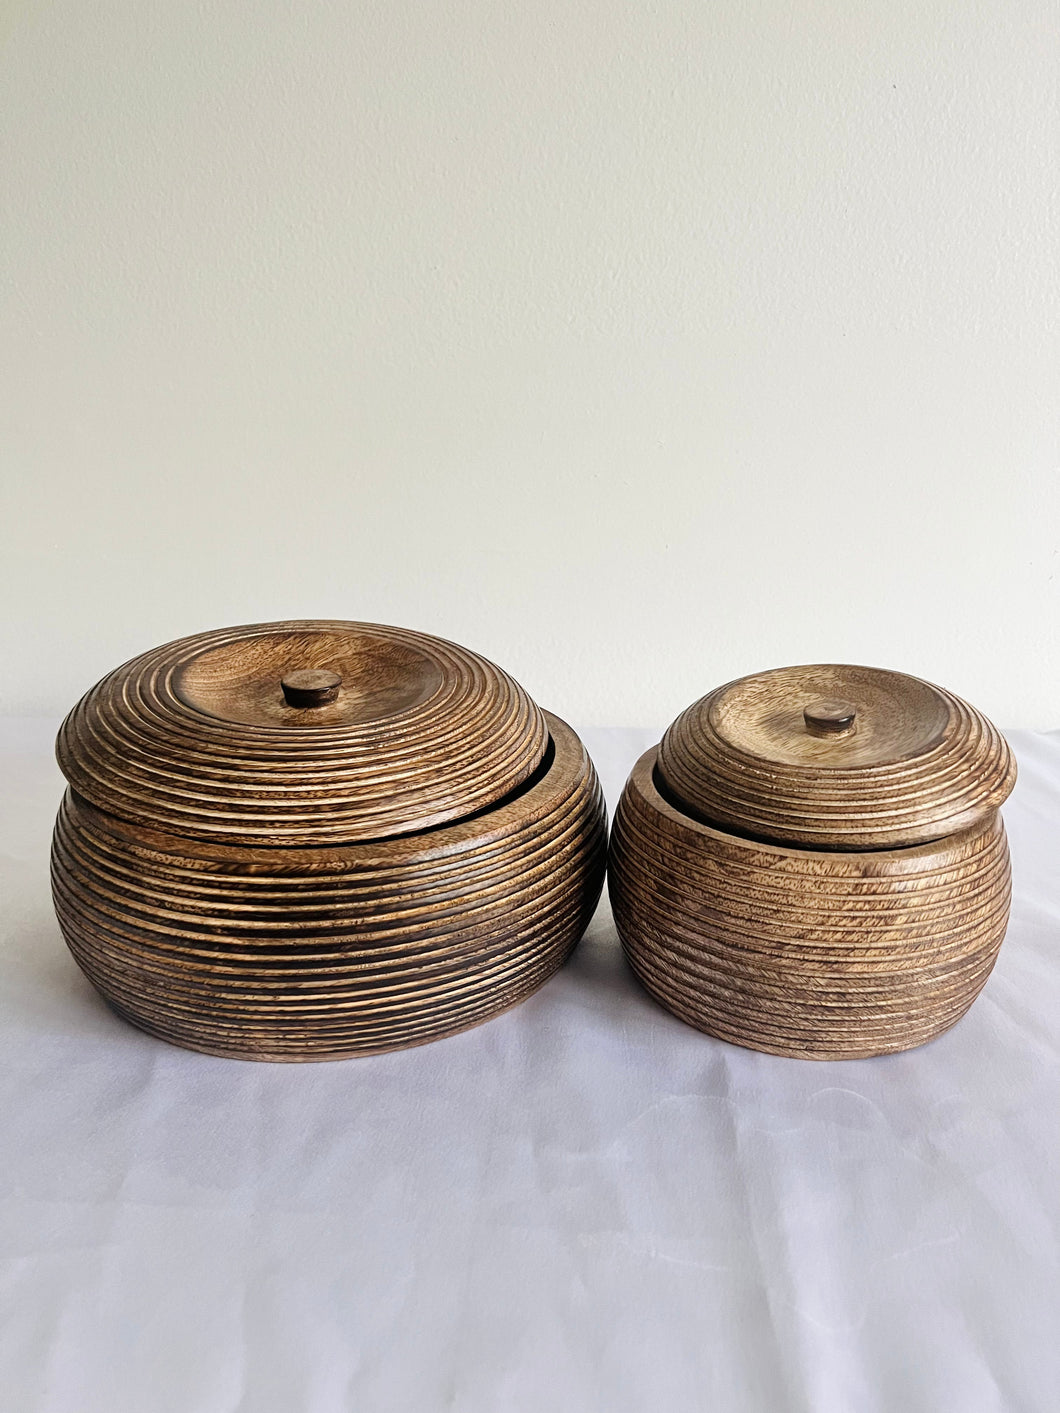 Bowls - Striped Mango Wood Bowl With Lid